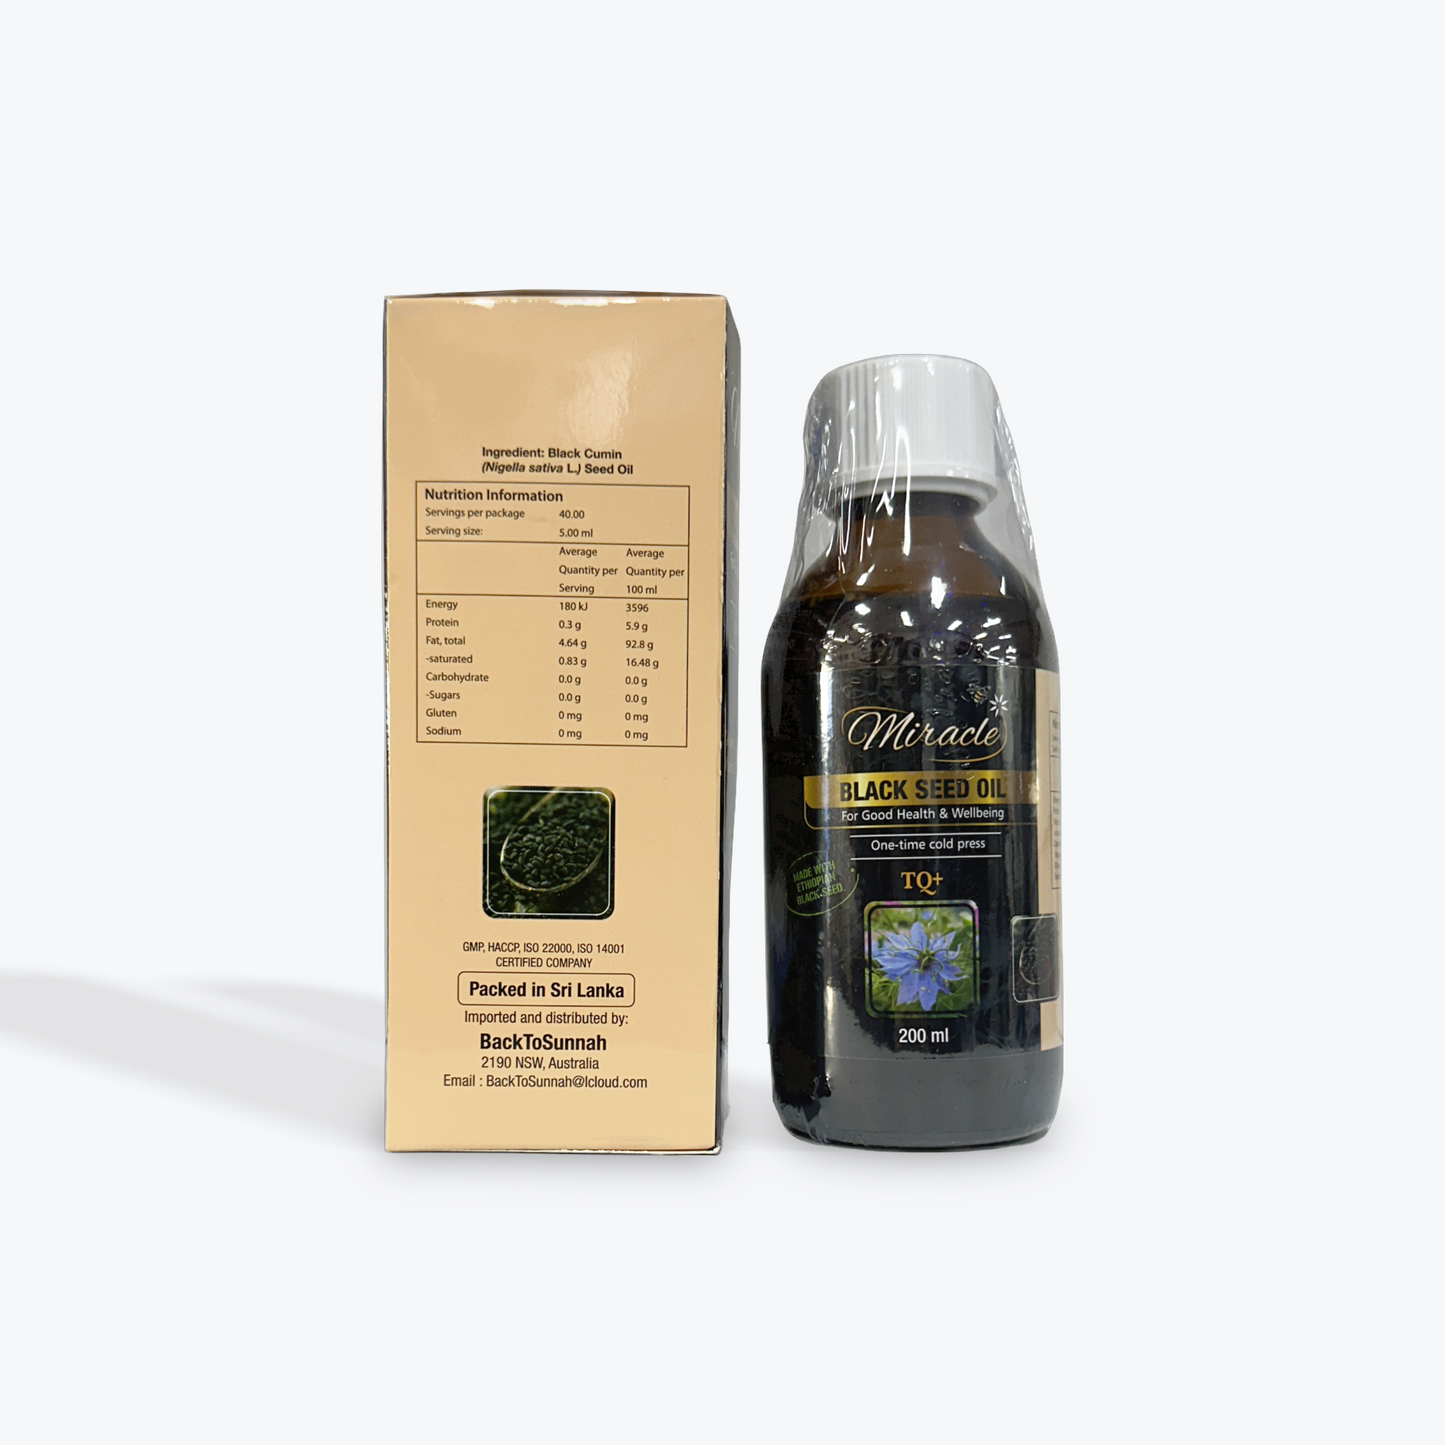 Miracle Black Seed Oil